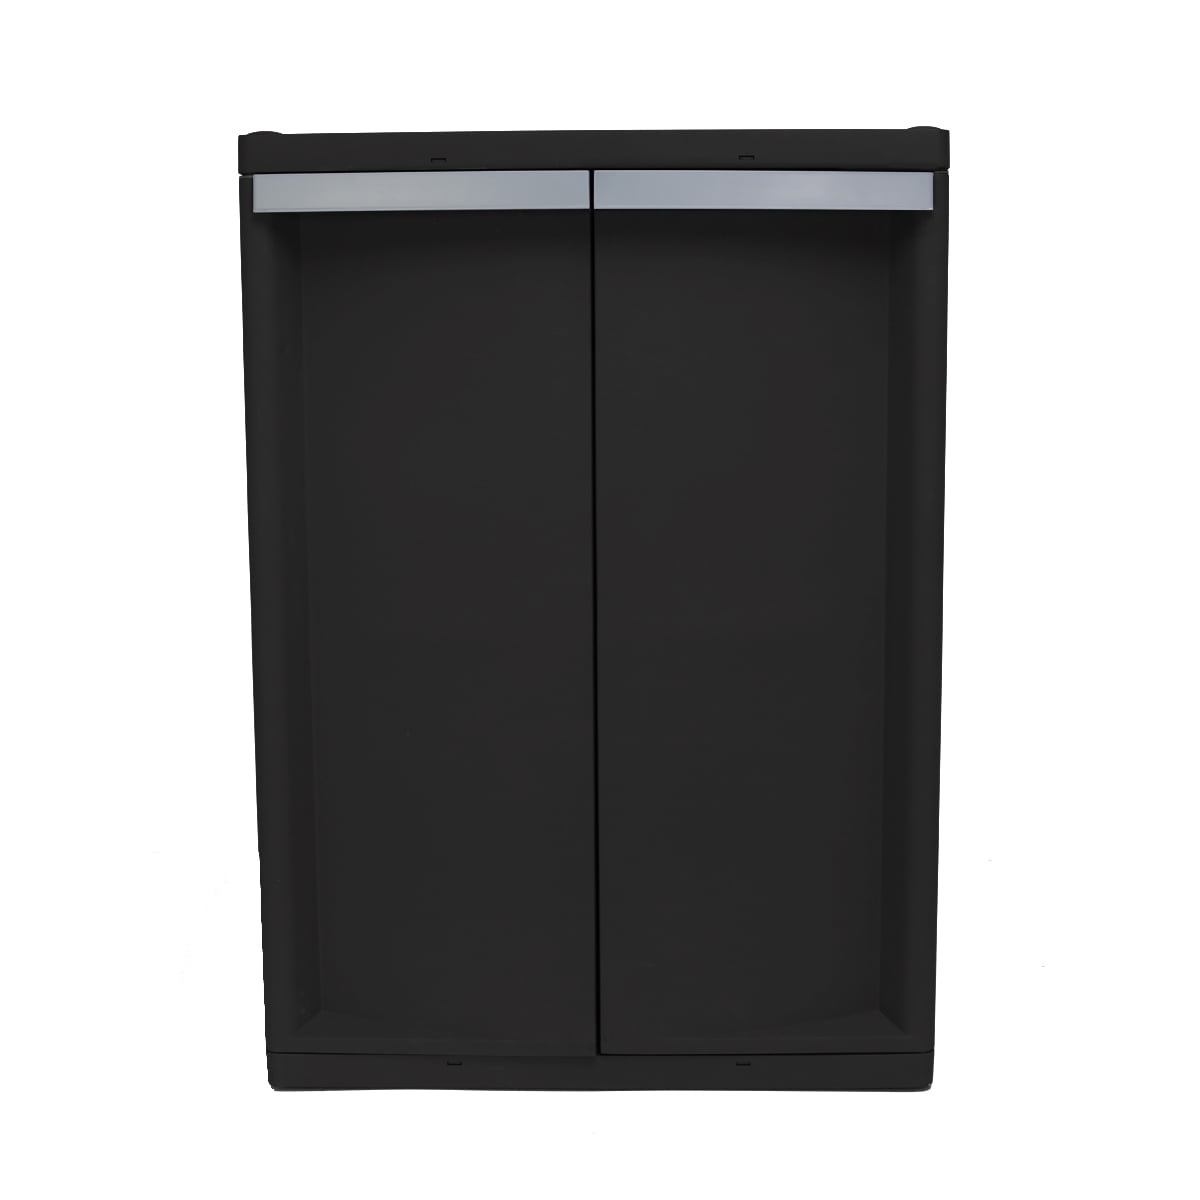 Outdoor Storage Cabinet Patio Furniture Plastic Shelves Bathroom Garage Lockable